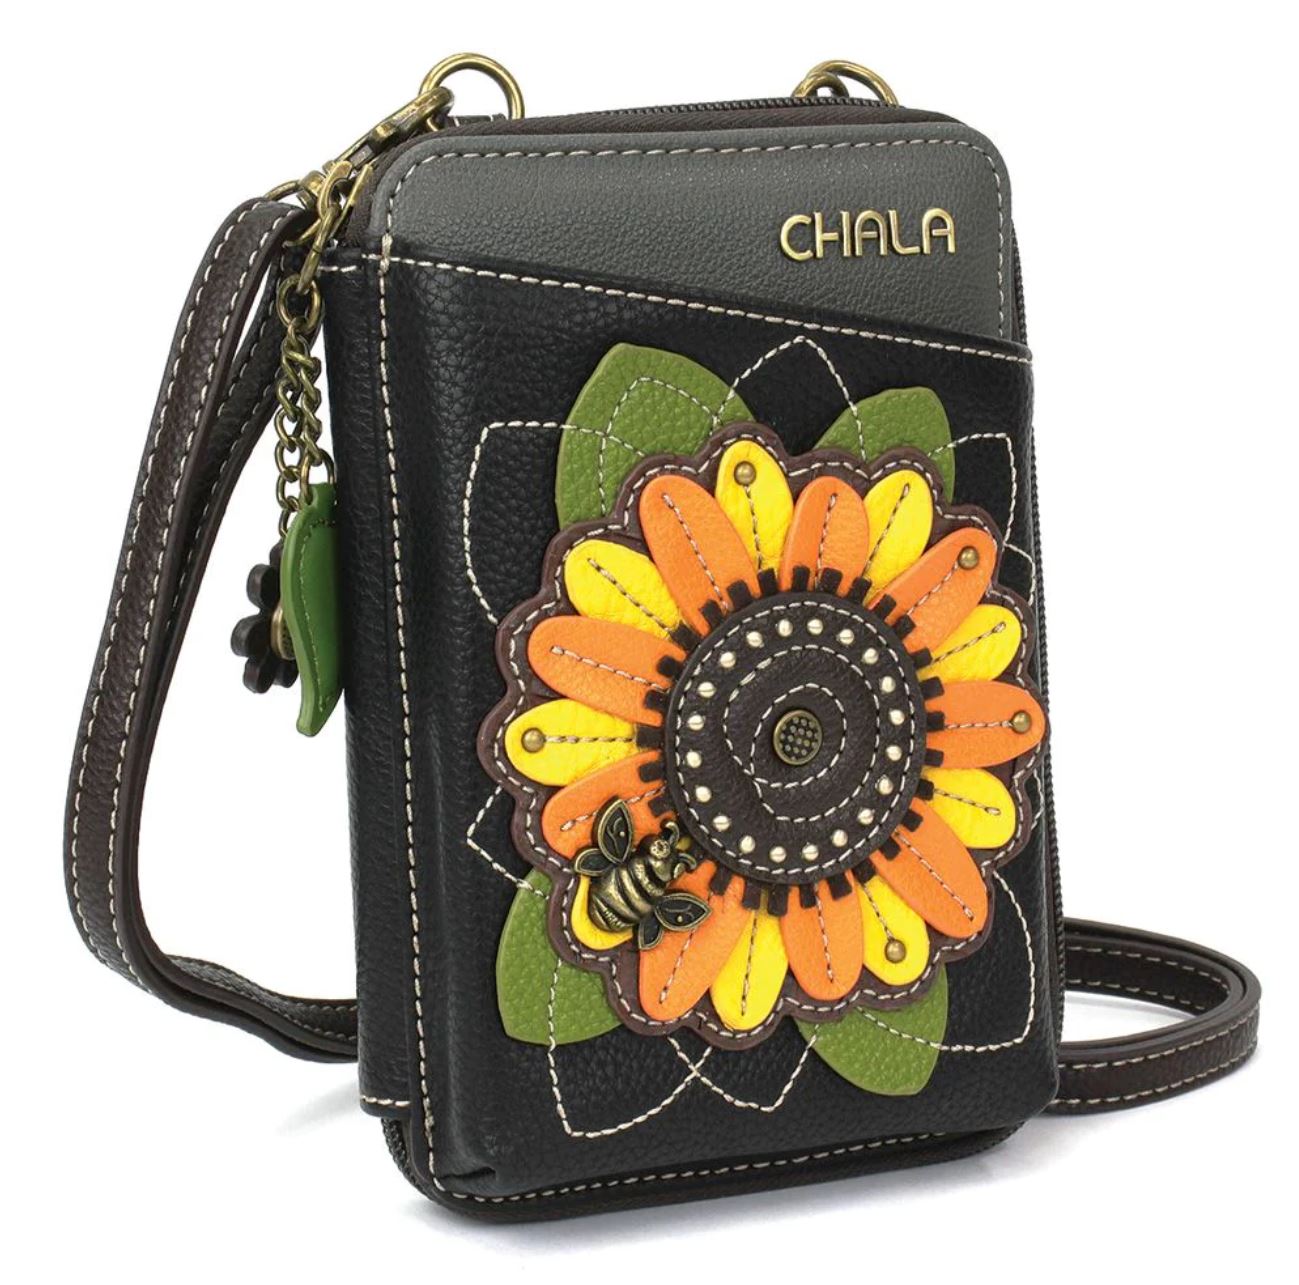 Chala Wallet Xbody Bag - Sunflower